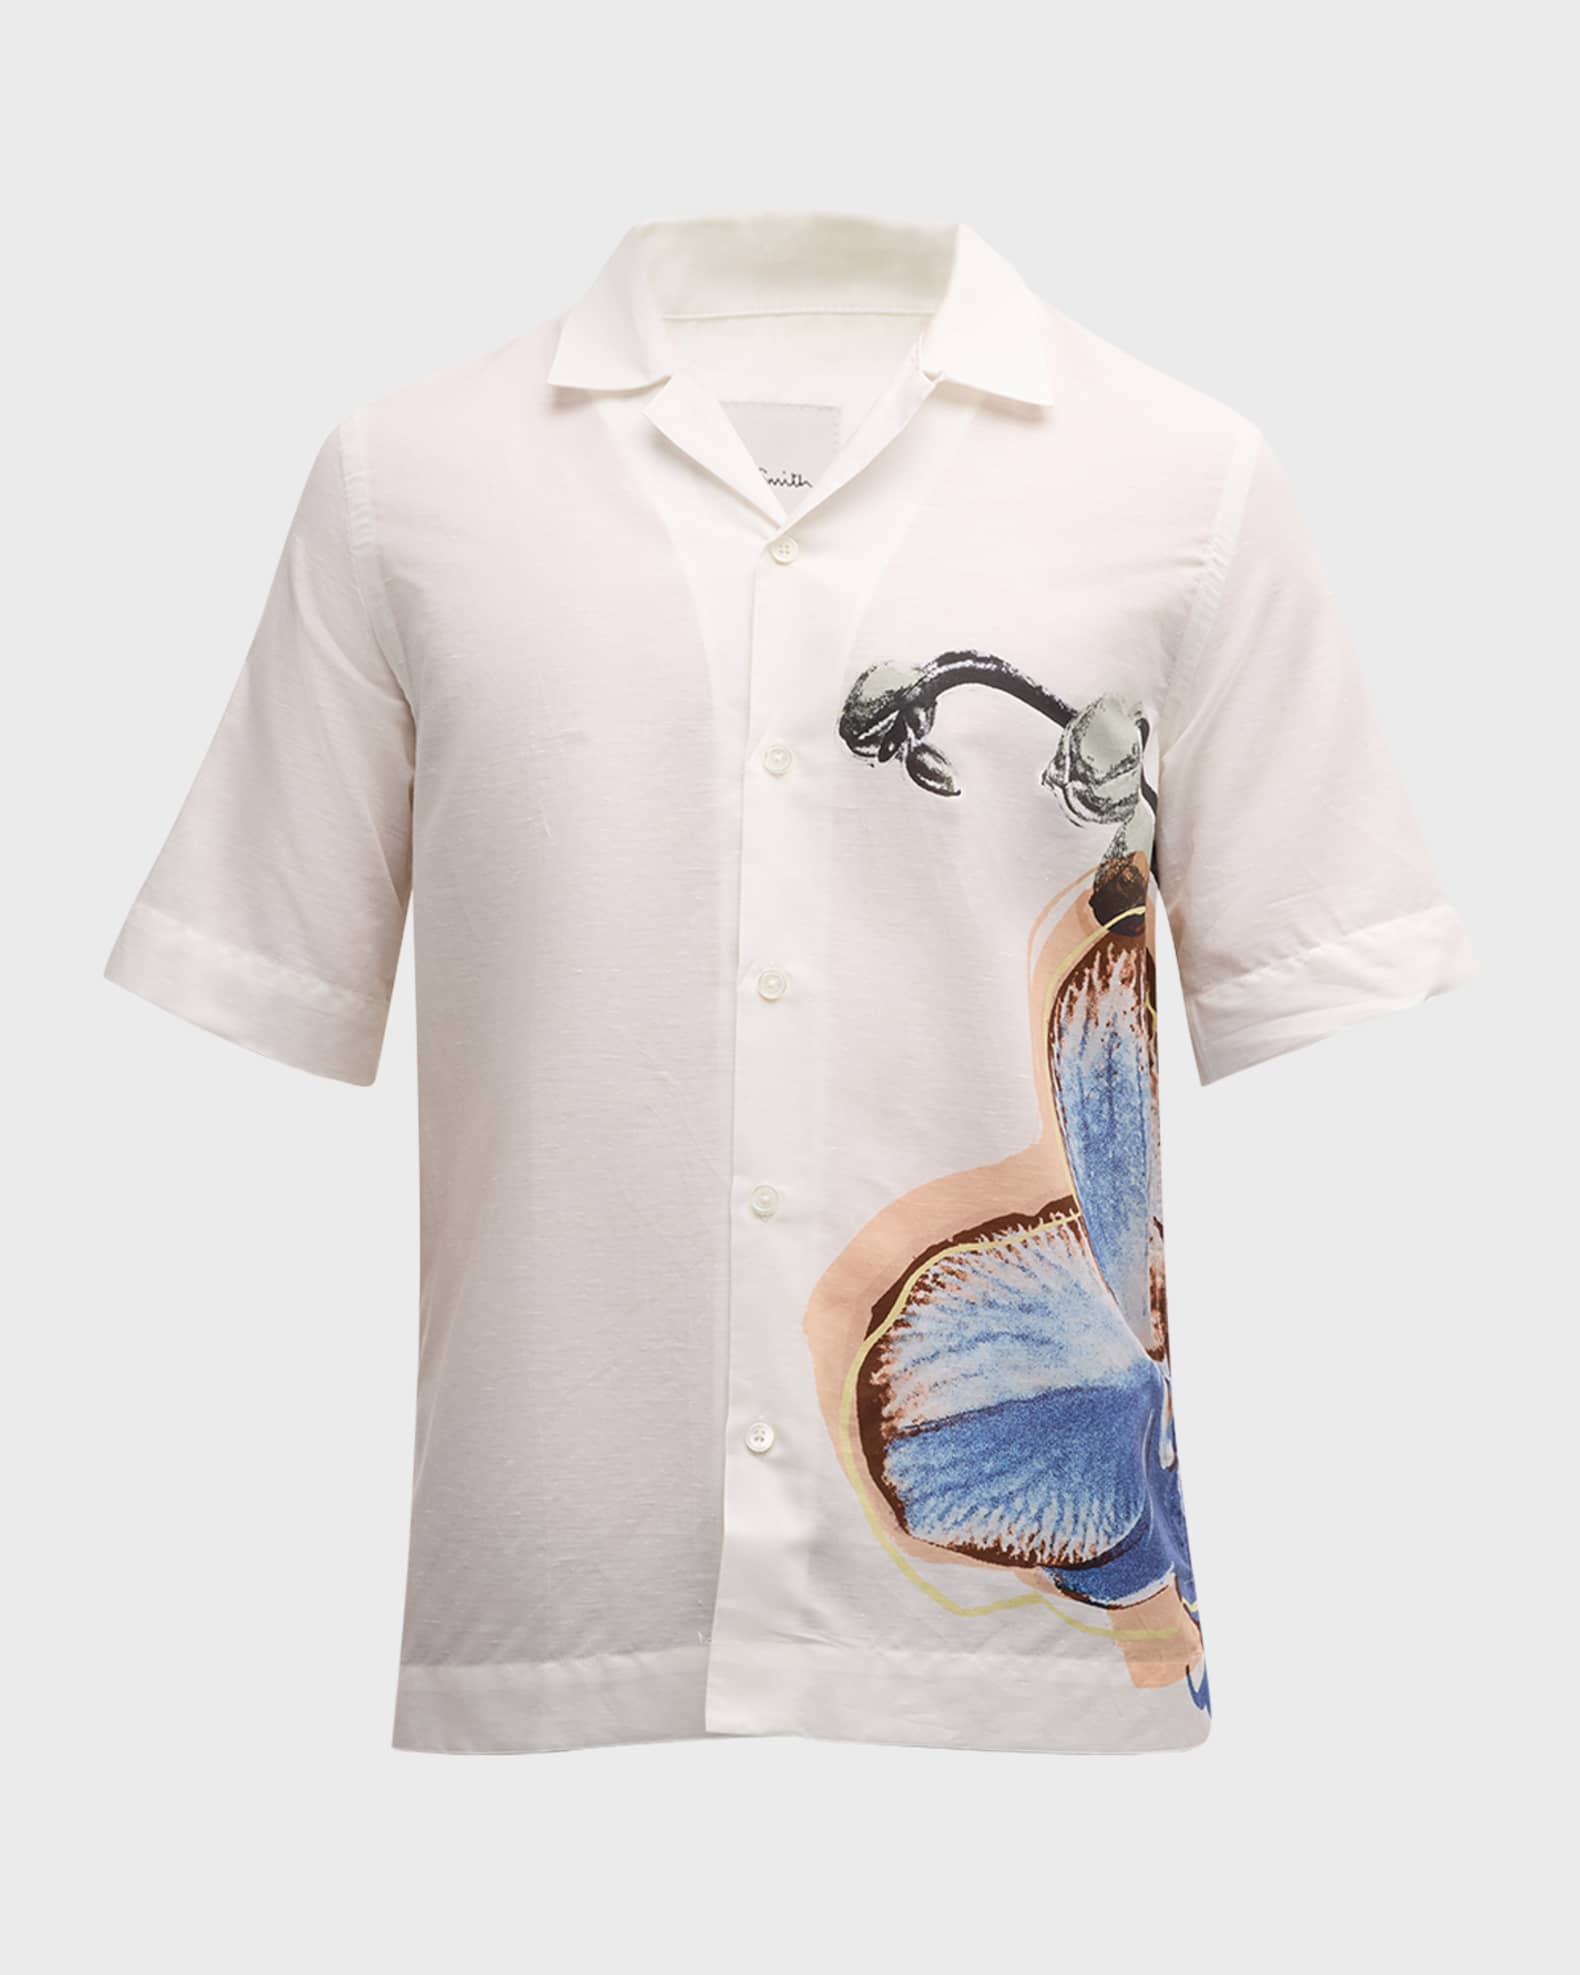 Paul Smith - White Linen Shirt